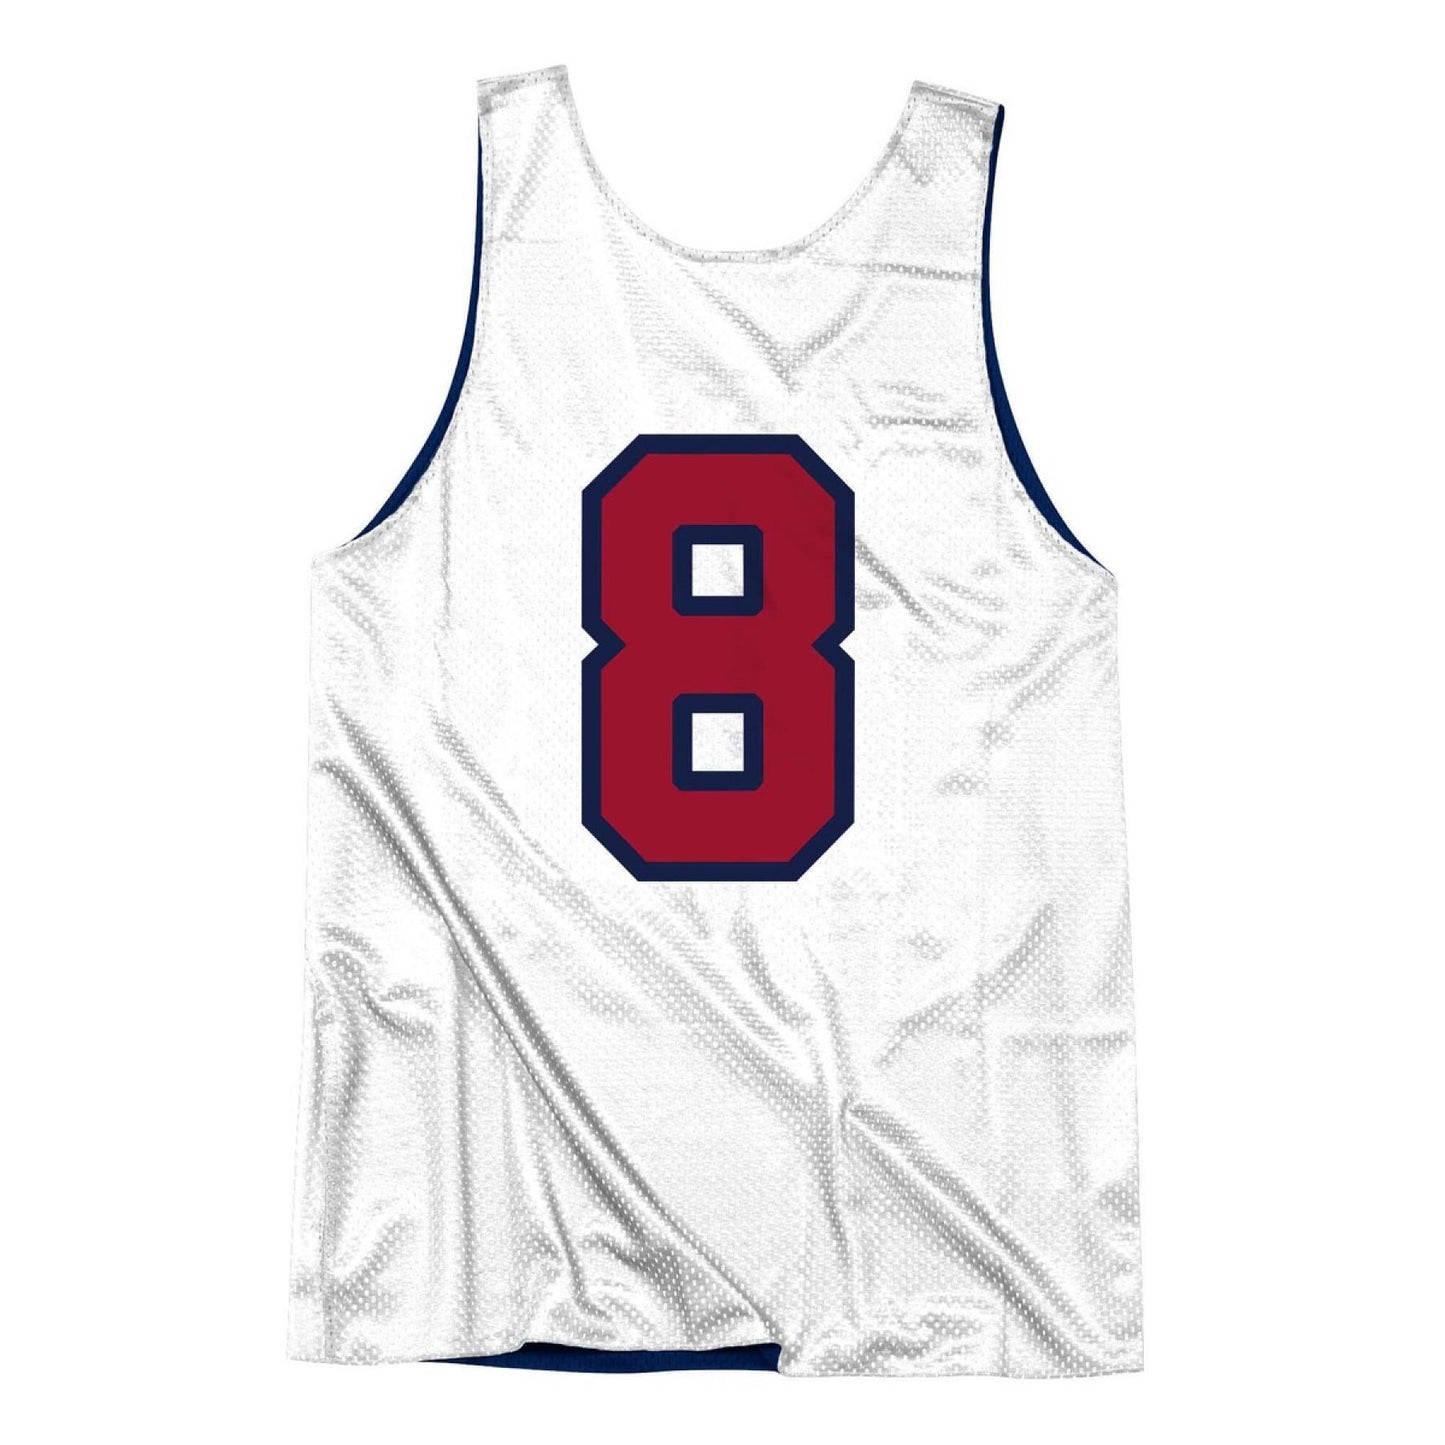 NBA Authentic Reversible Practice Jersey Team USA 1992 Scottie Pippen